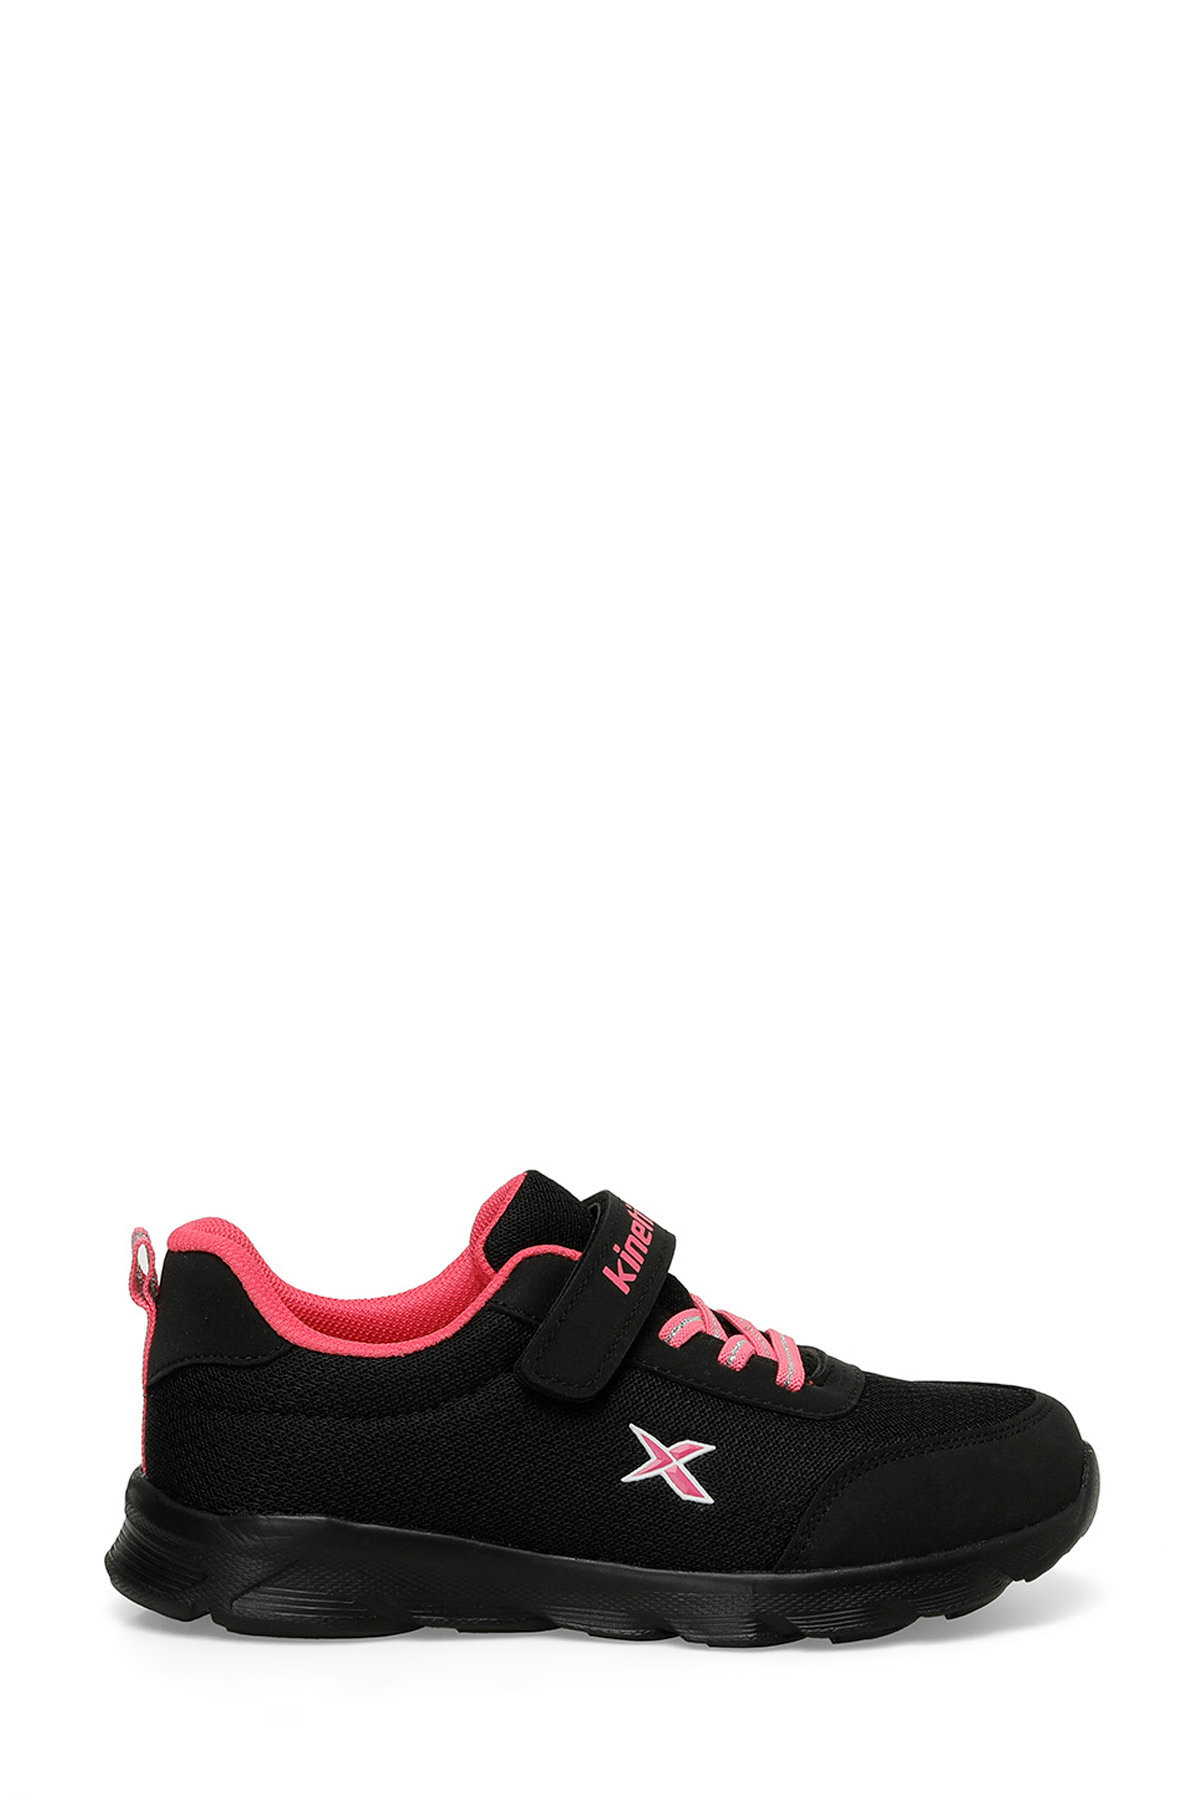 KINETIX NICUS 4FX Black Girls Sneaker